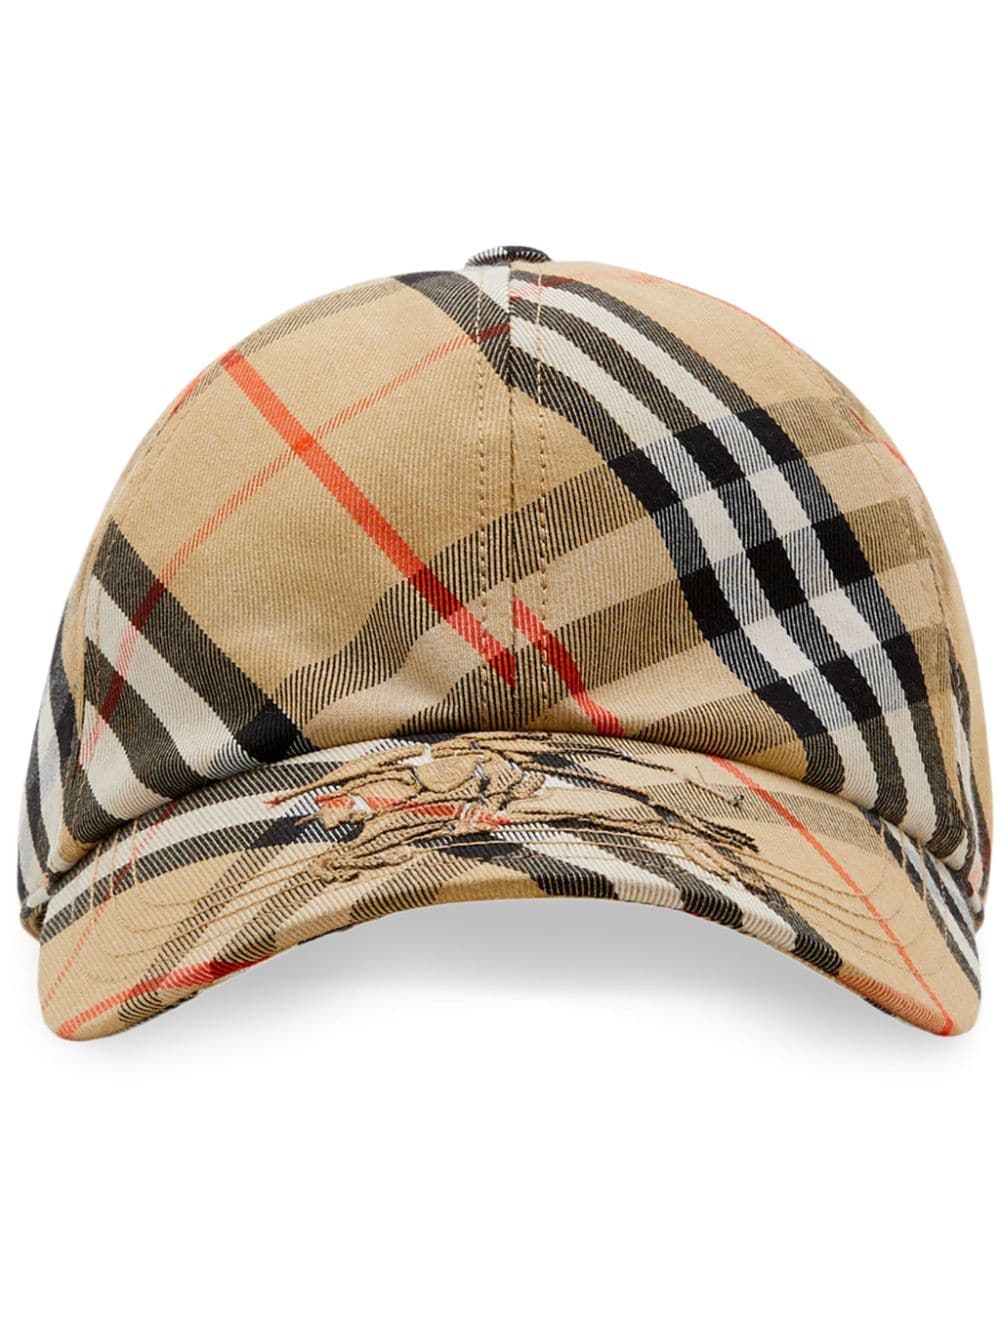 Vintage Check baseball cap<BR/><BR/><BR/>